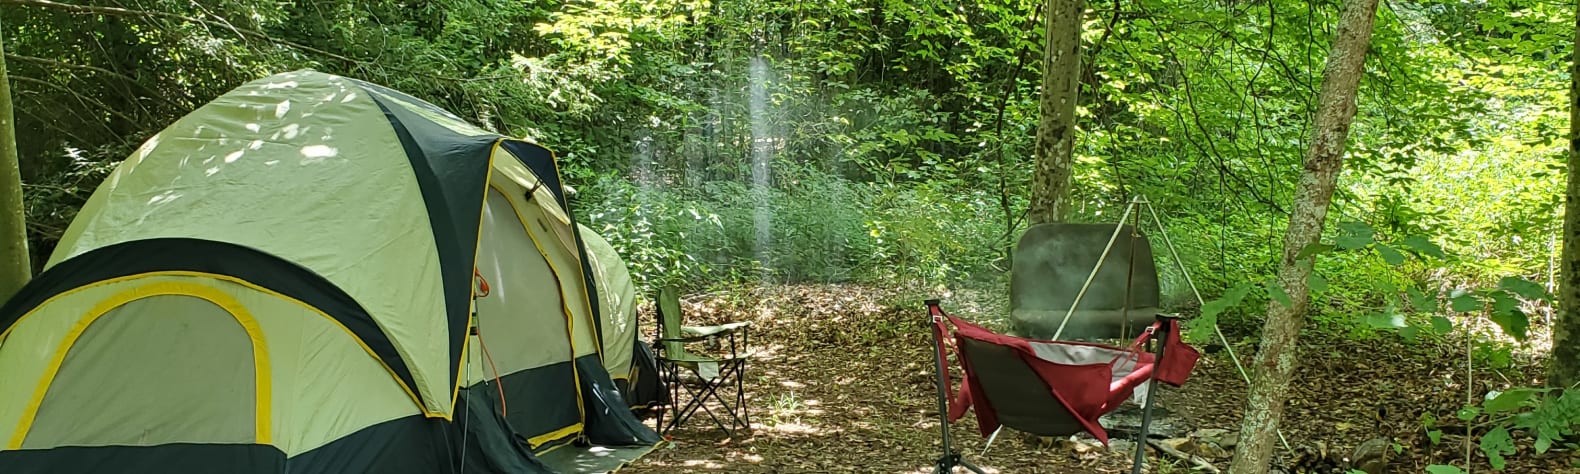 Private primitive camping